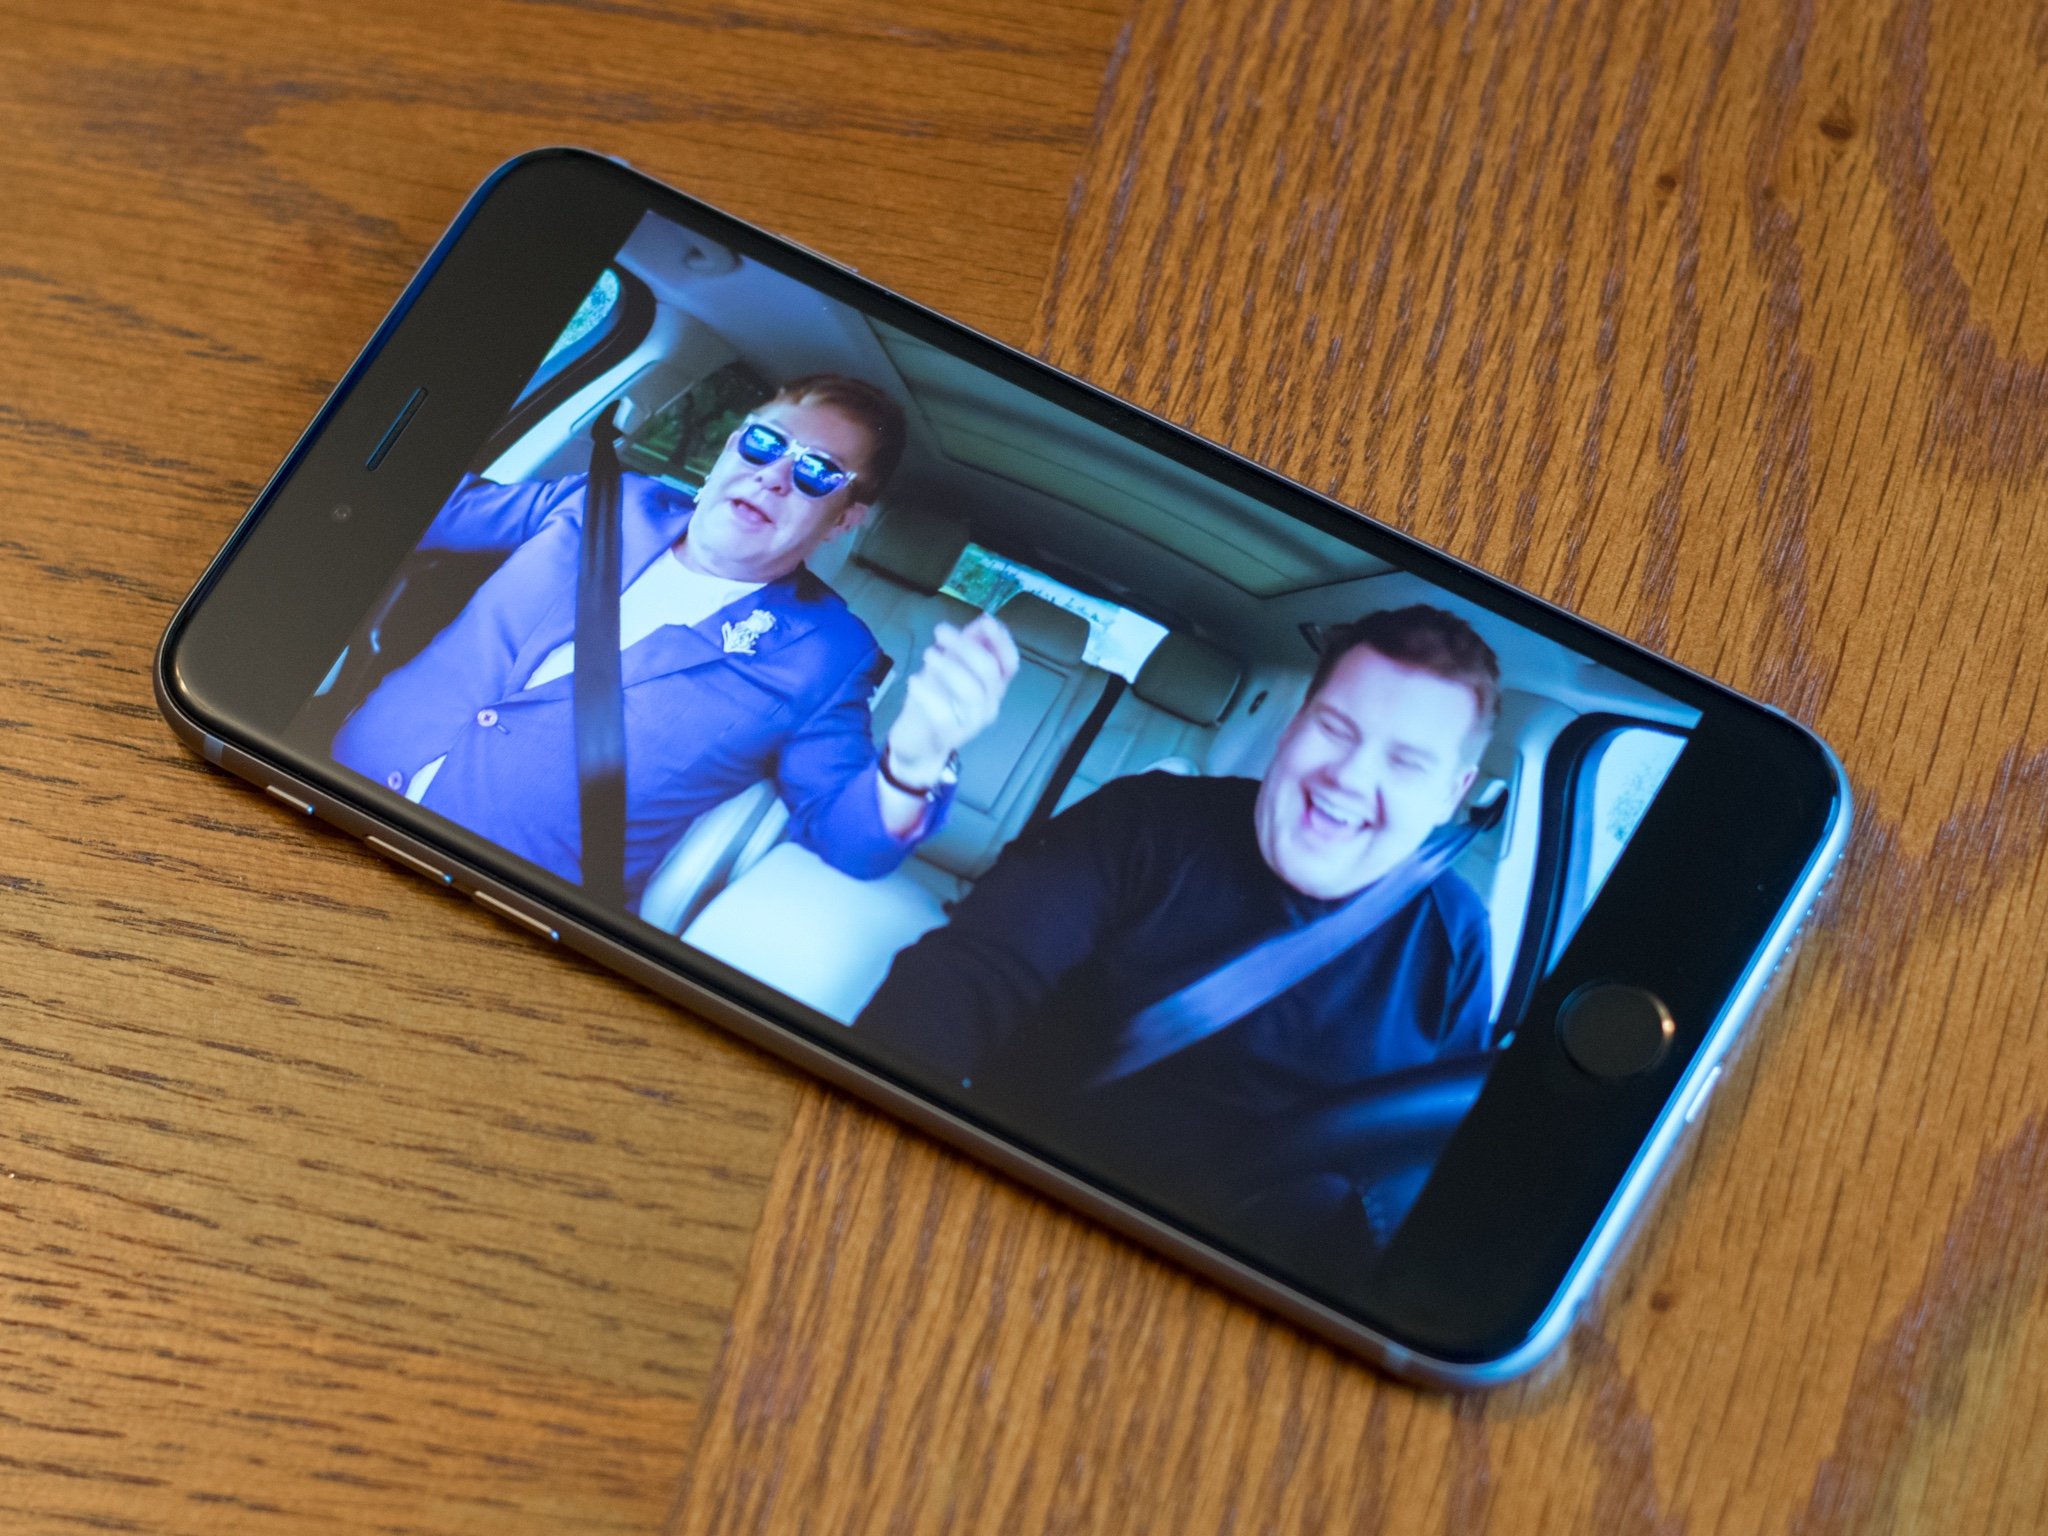 Apple buys streaming rights to Carpool Karaoke spinoff series